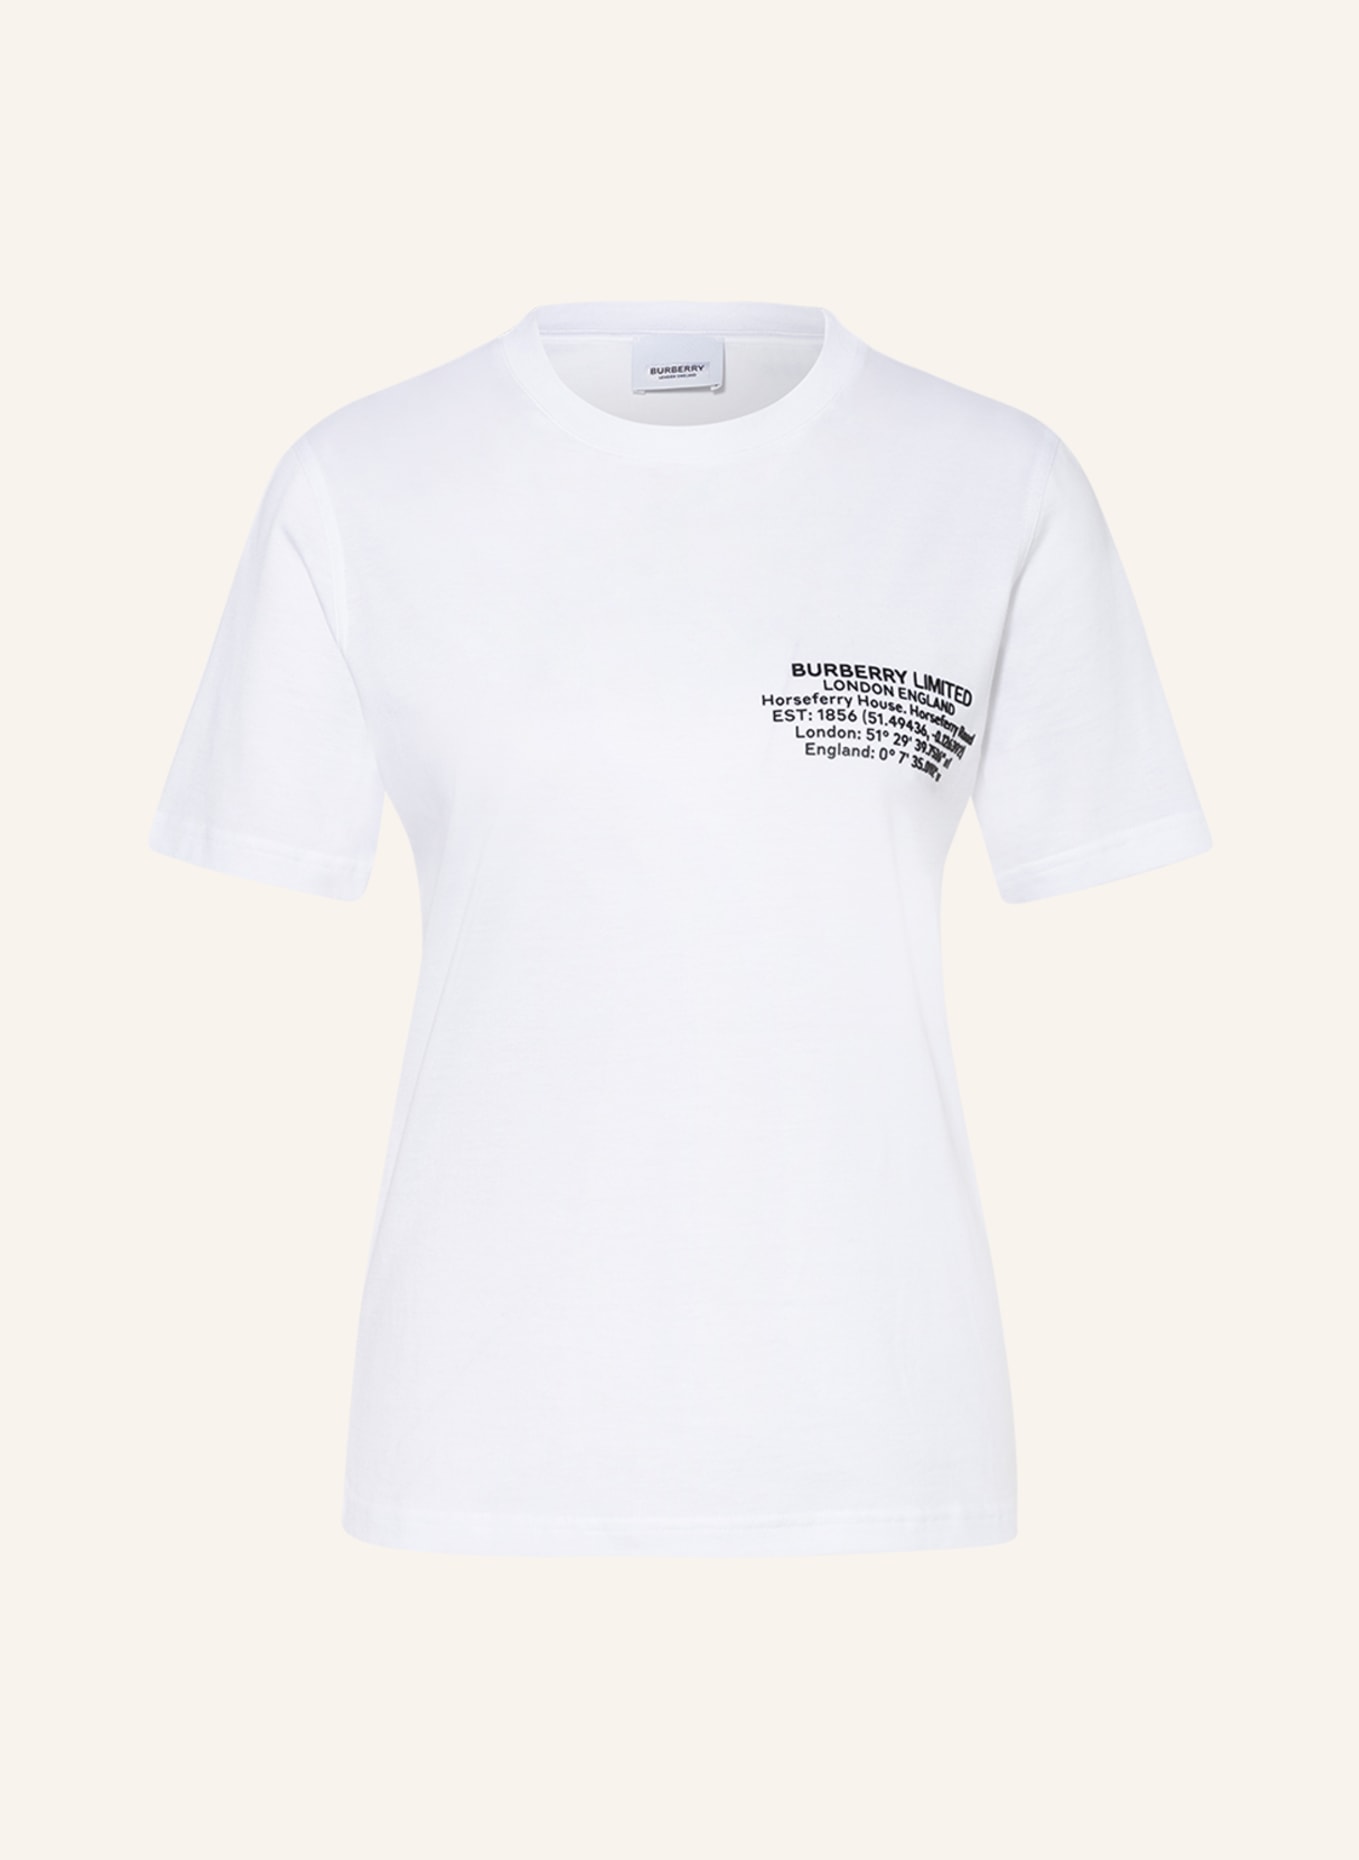 BURBERRY T-Shirt JEMMA, Farbe: WEISS (Bild 1)